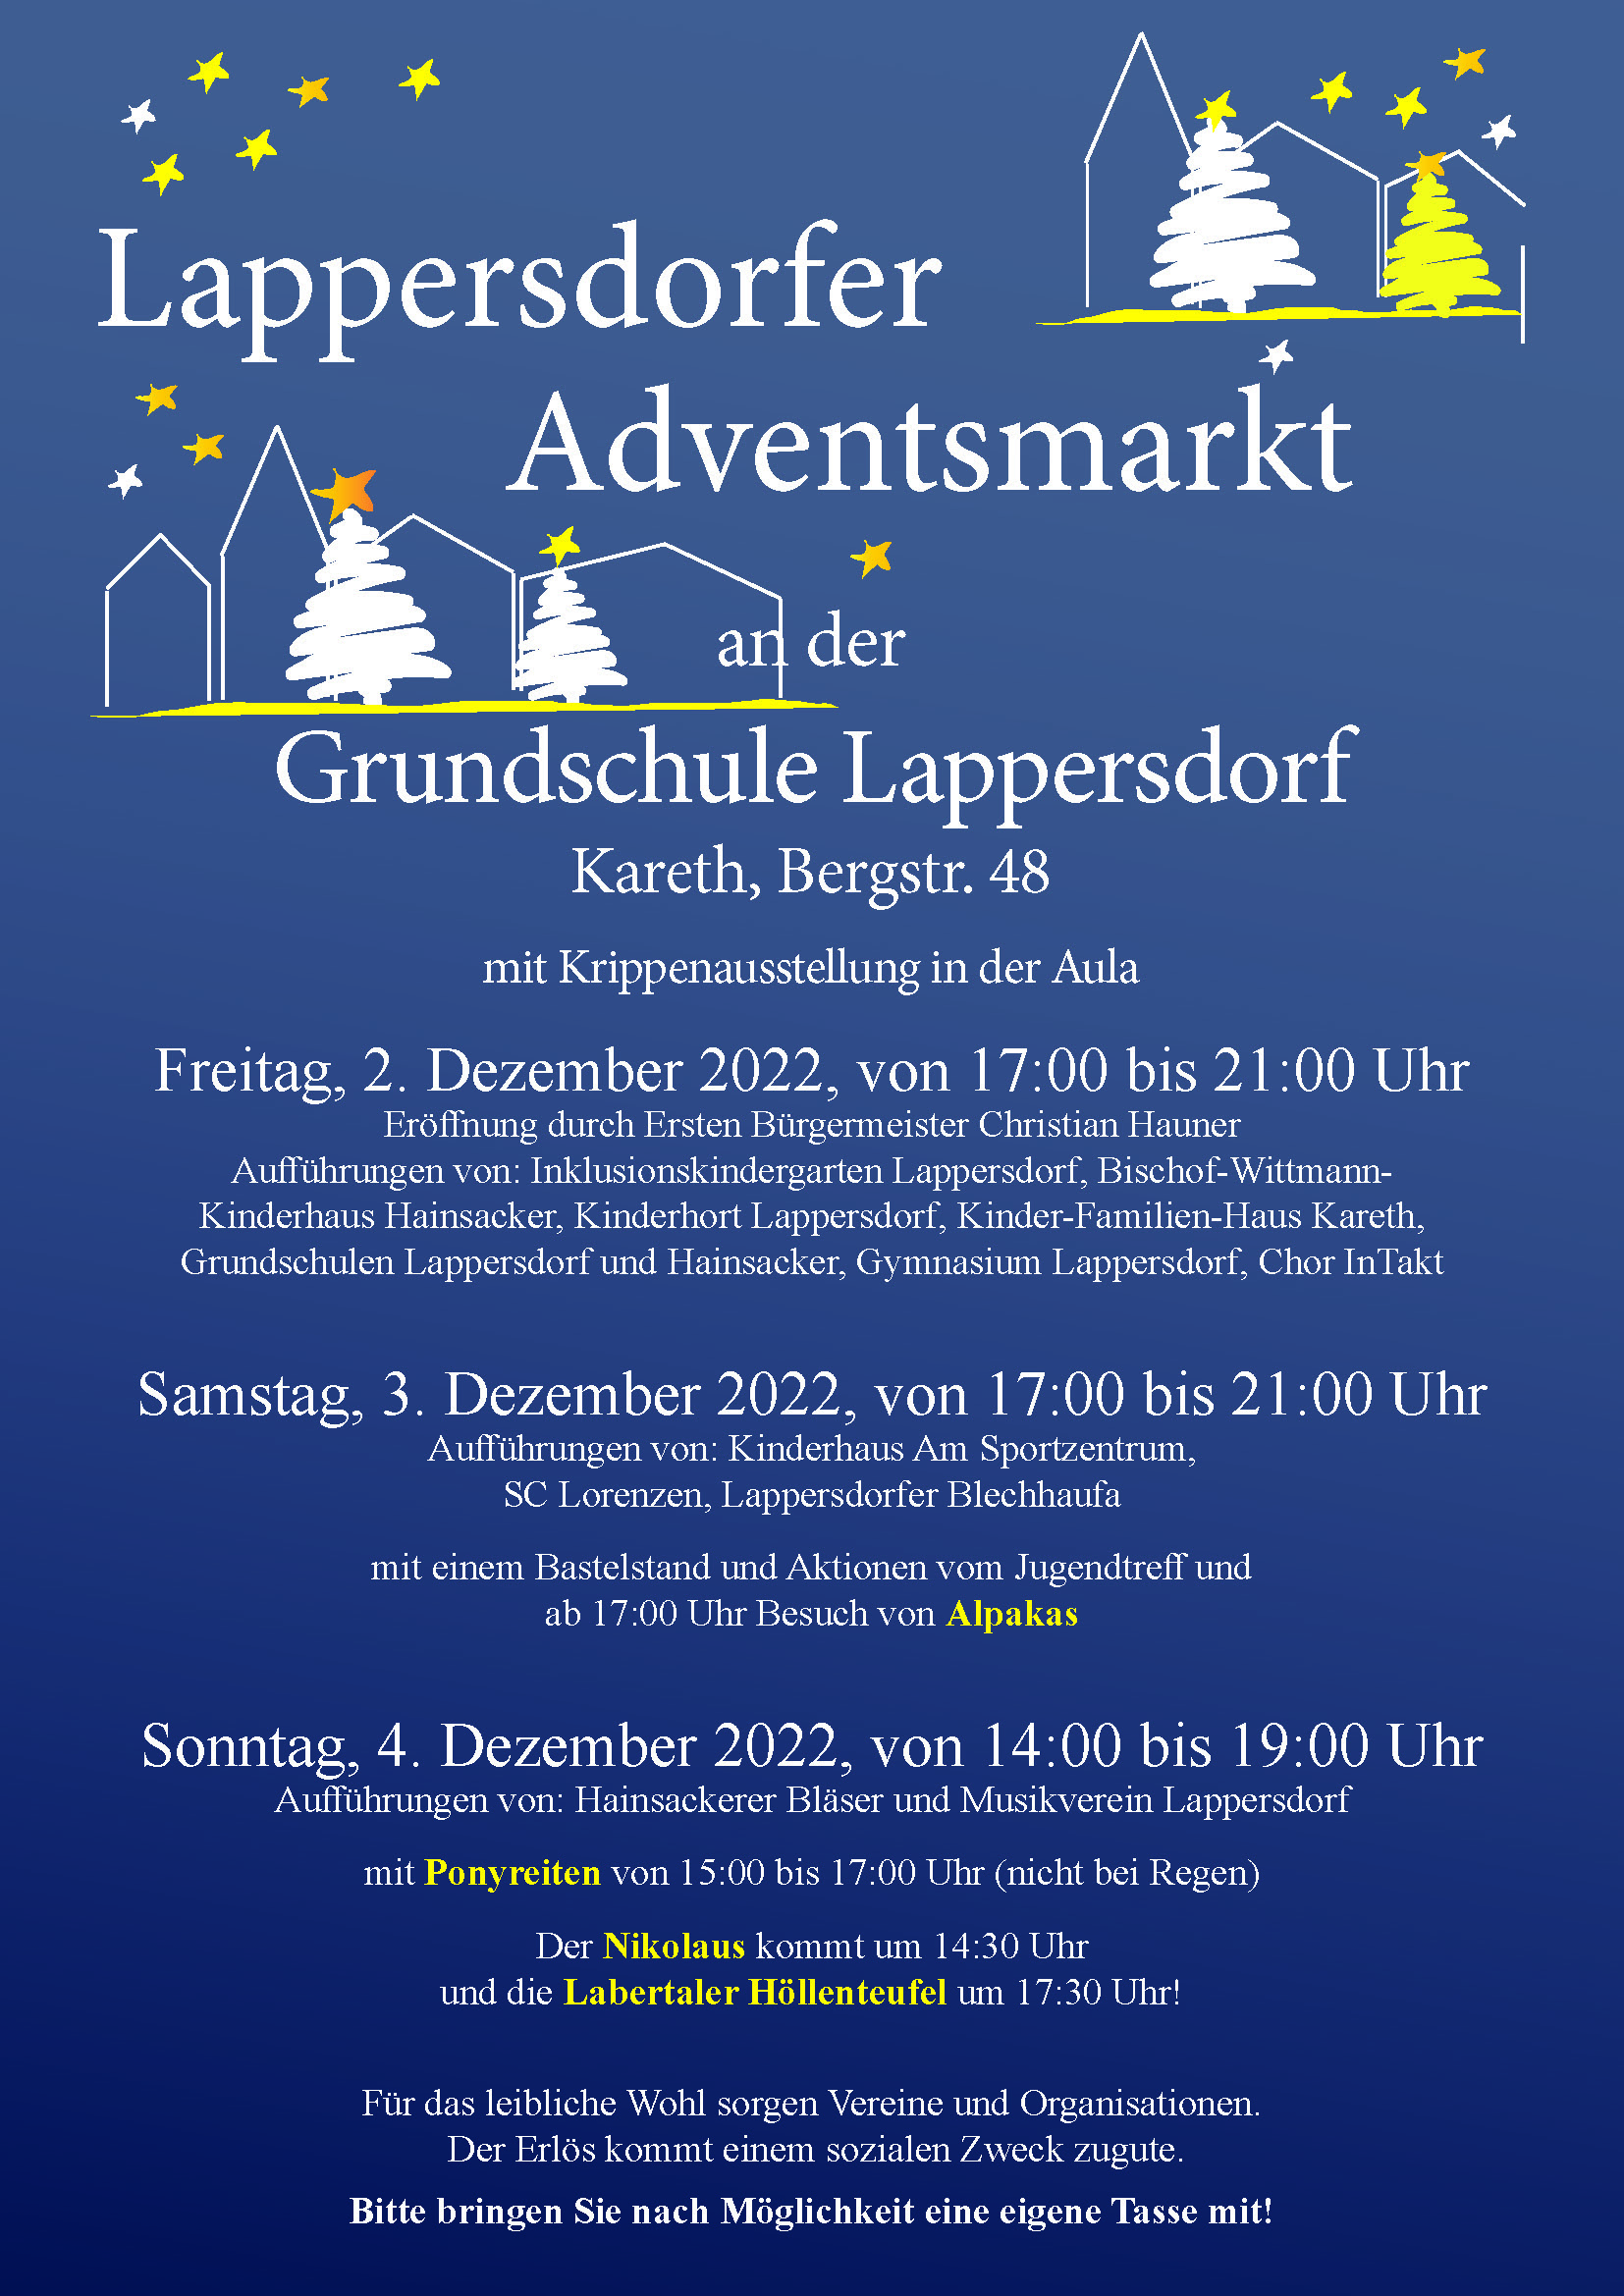 Lappersdorfer Adventsmarkt - Programm